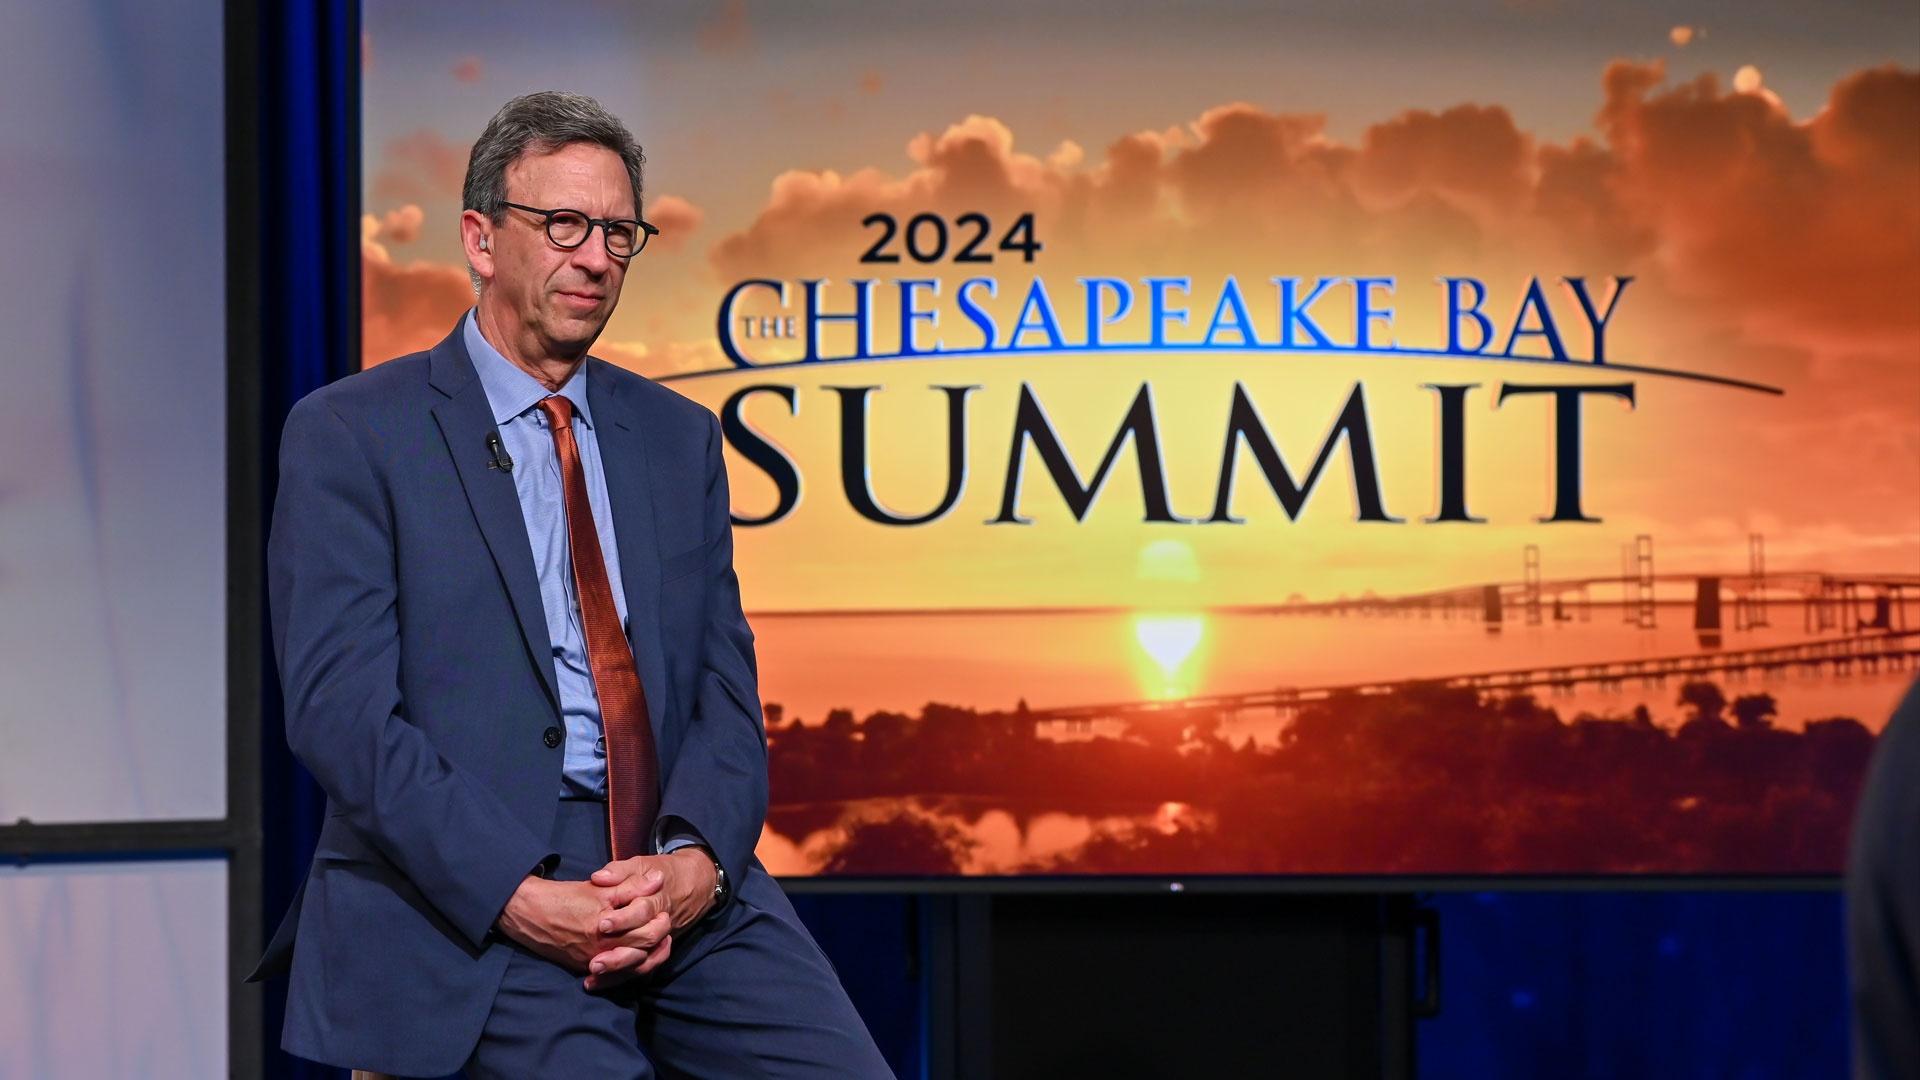 Chesapeake Bay Summit 2024: Course Correction